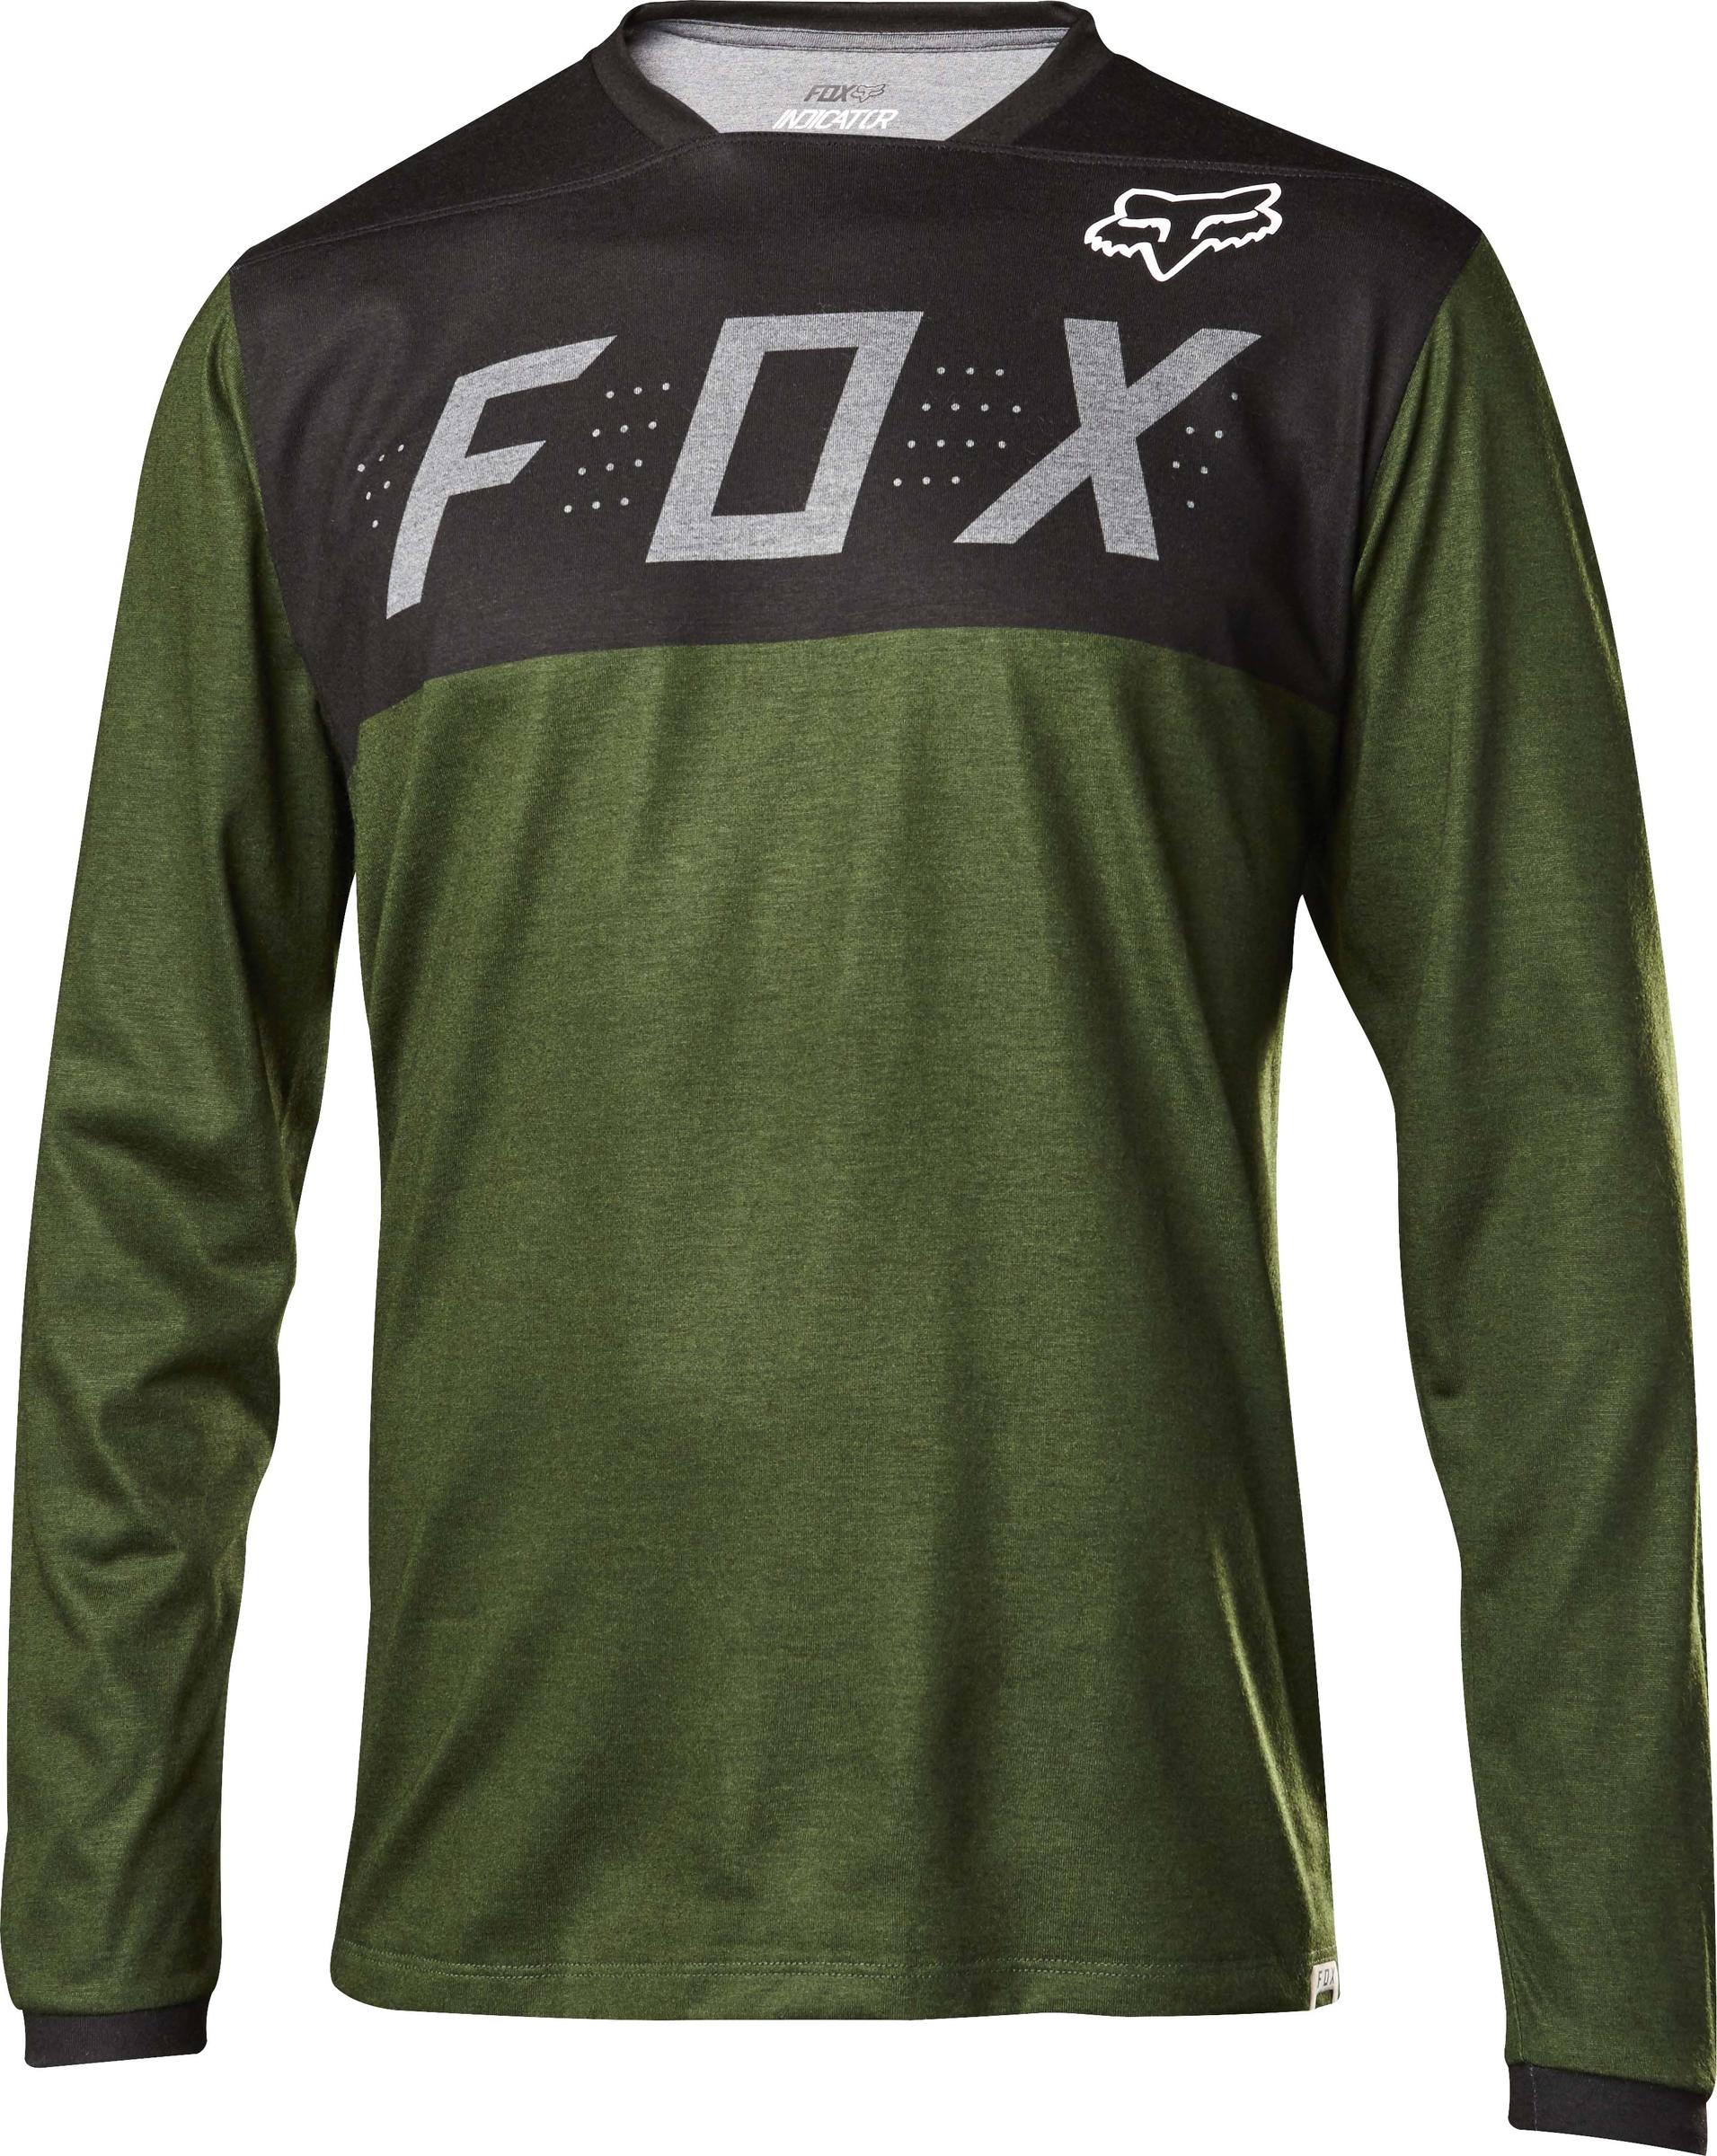 Vova Fox Cycling T Shirt Mountain Downhill Bike Long Sleeve Racing Clothes Dh Mtb Offroad Motocross Fox Jerseys